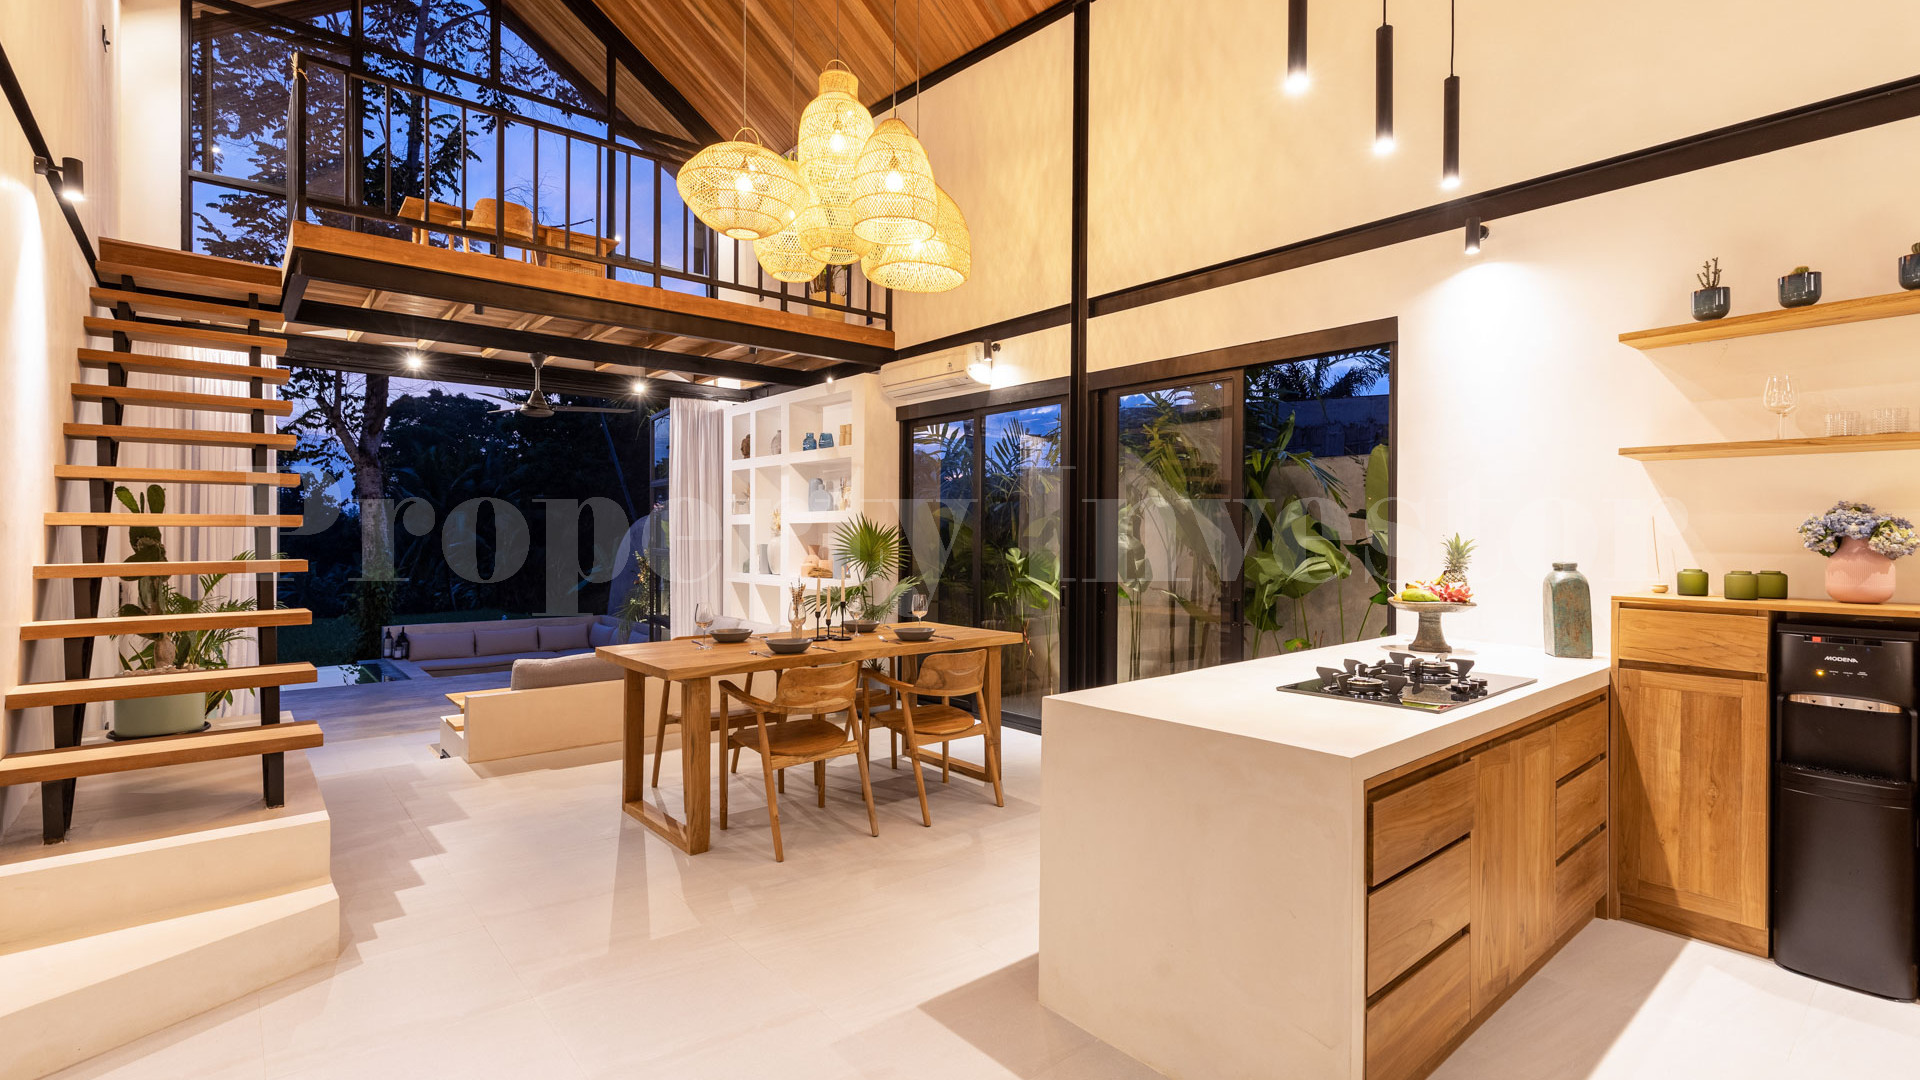 Chic 1-3 Bedroom Designer Loft Villas with Beautiful Rice Paddy Views for Sale Near Canggu, Bali